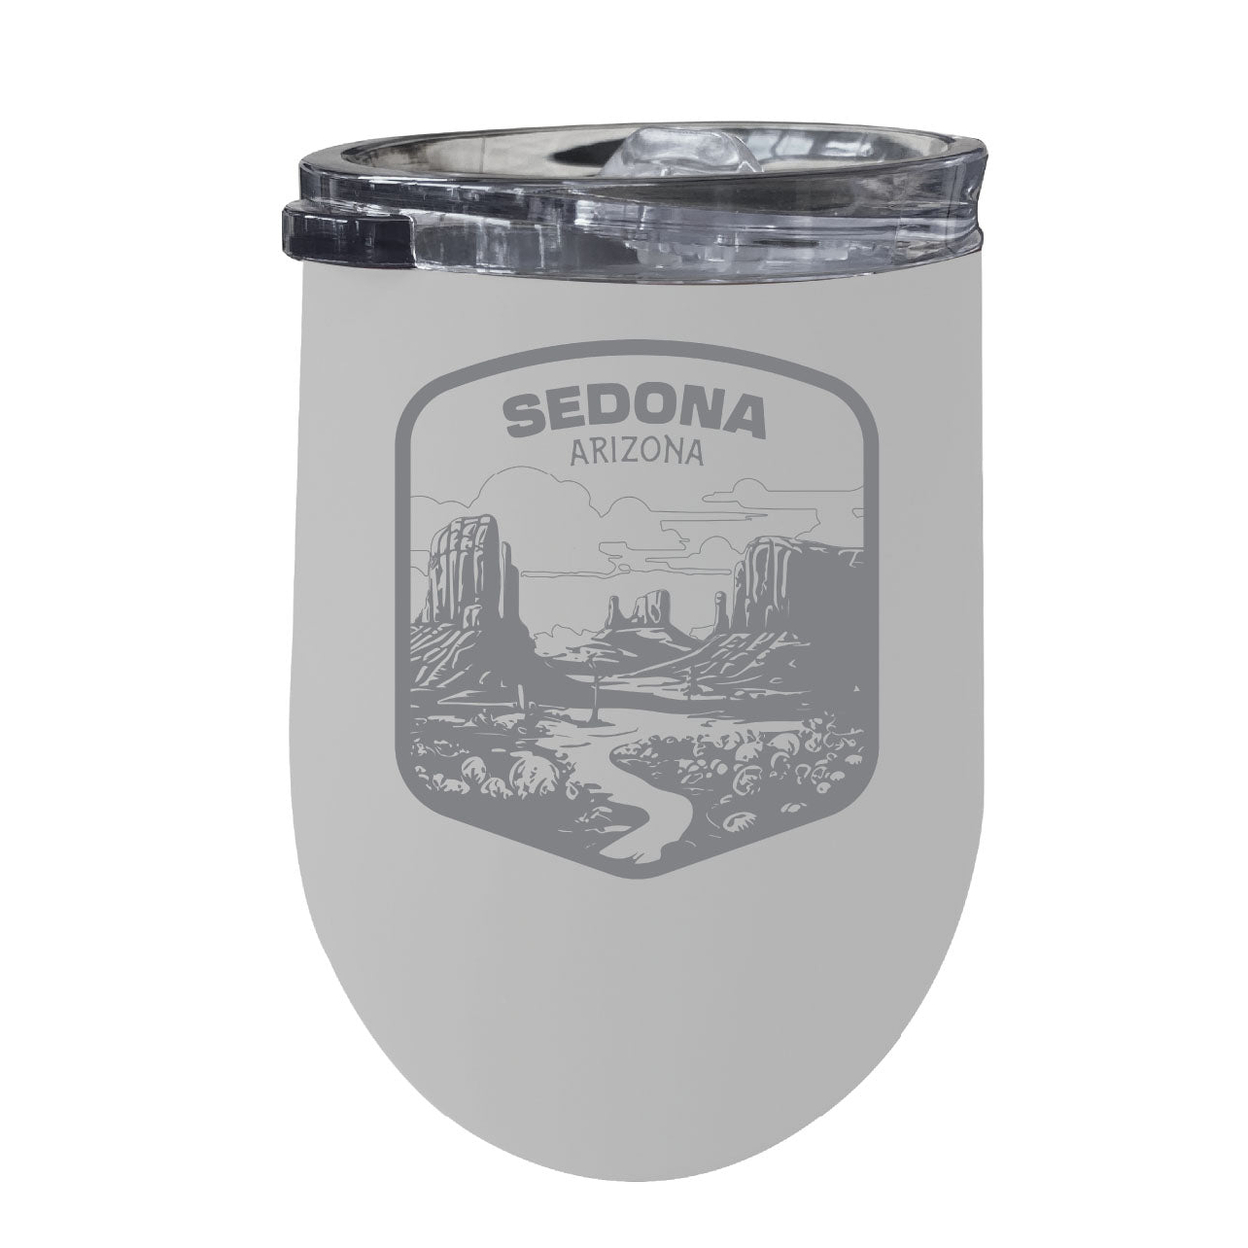 Sedona Arizona Souvenir 12 Oz Engraved Insulated Wine Stainless Steel Tumbler - Seafoam,,4-Pack